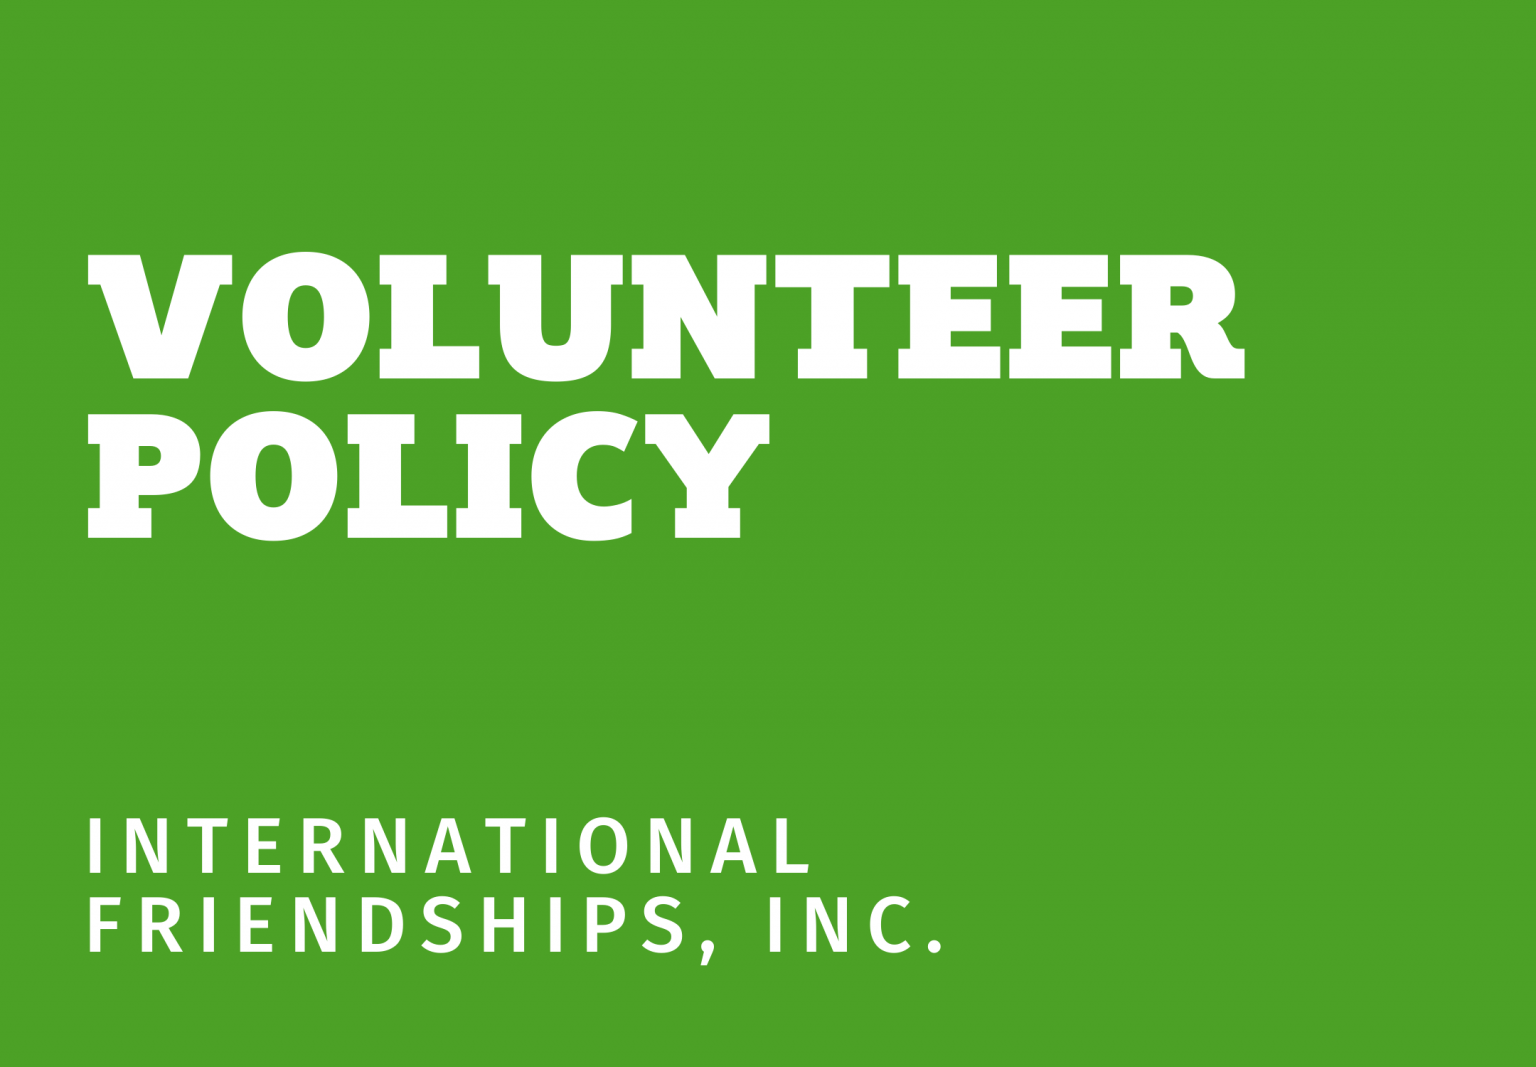 Volunteer Policy Image